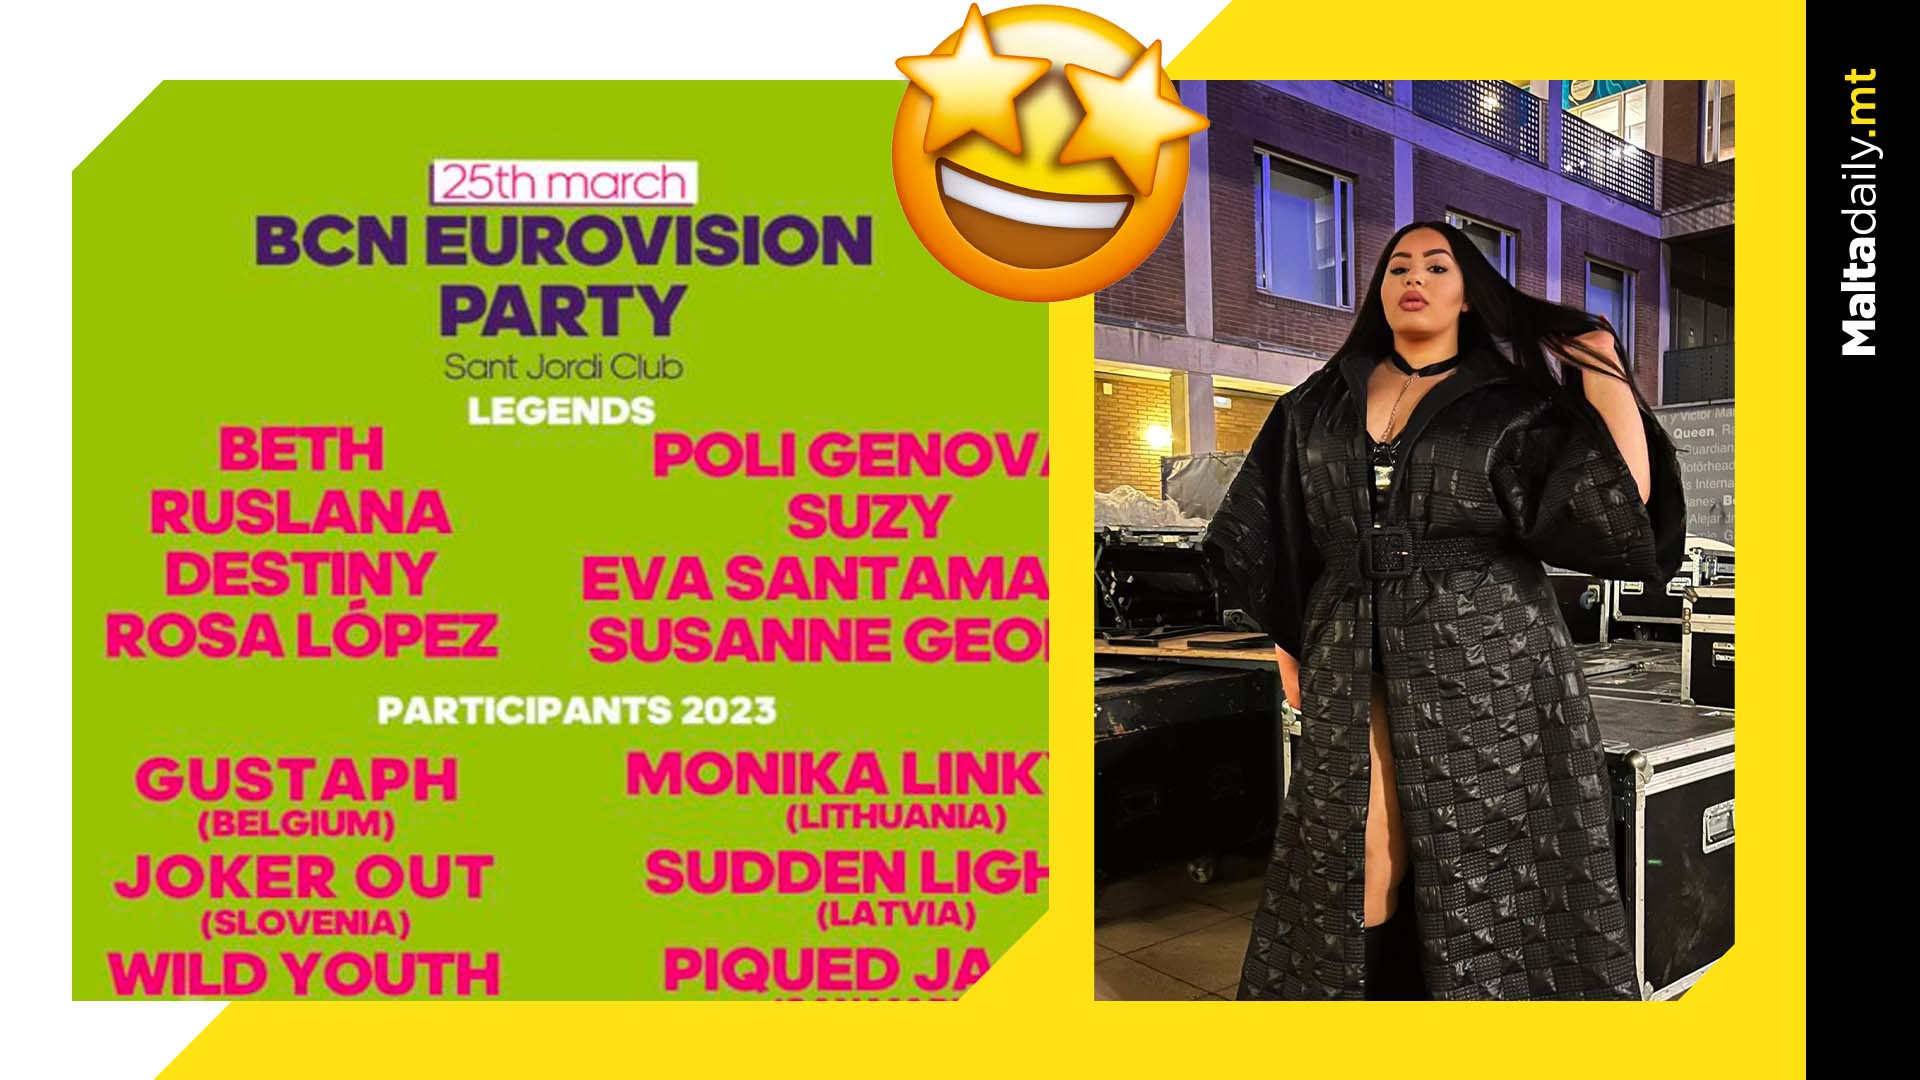 Malta’s Destiny listed amongst Eurovision history’s legends